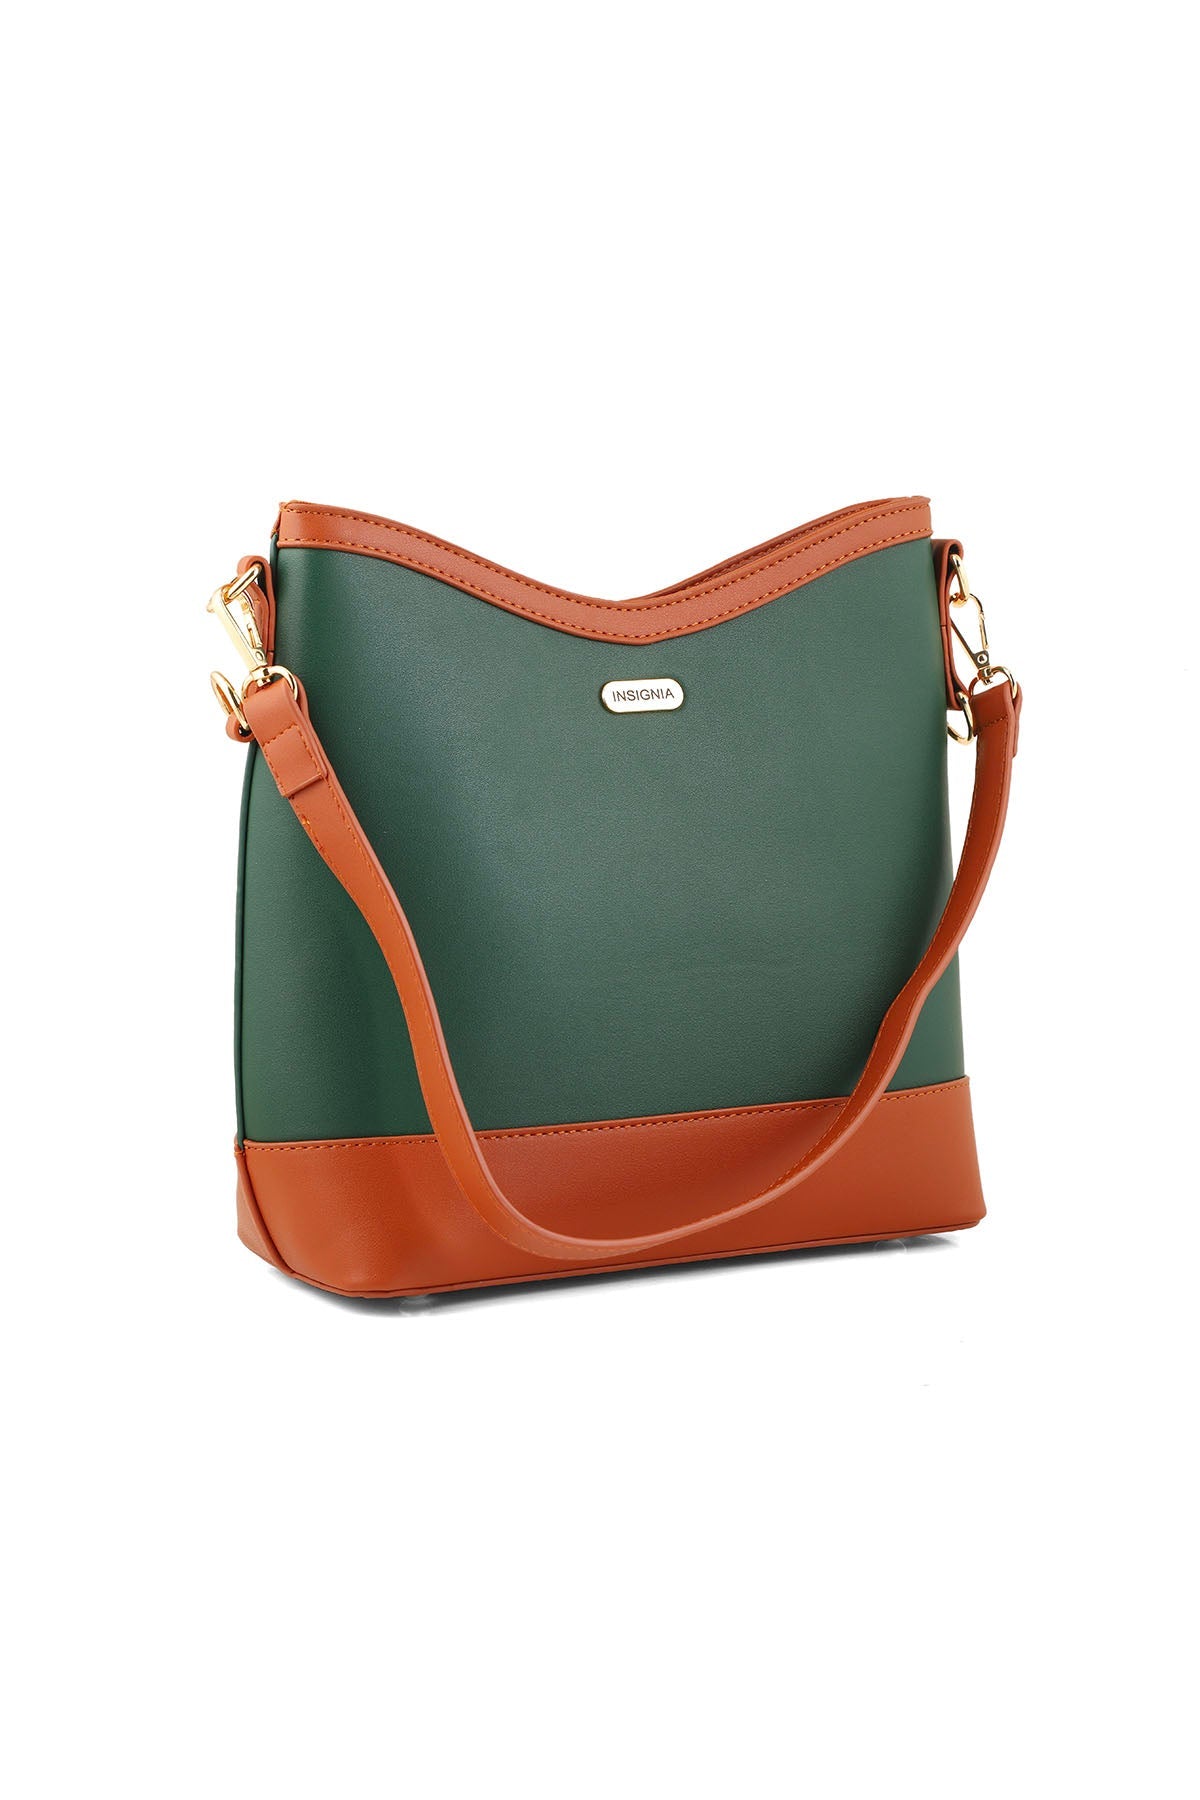 Bucket Hand Bags B15130-Green